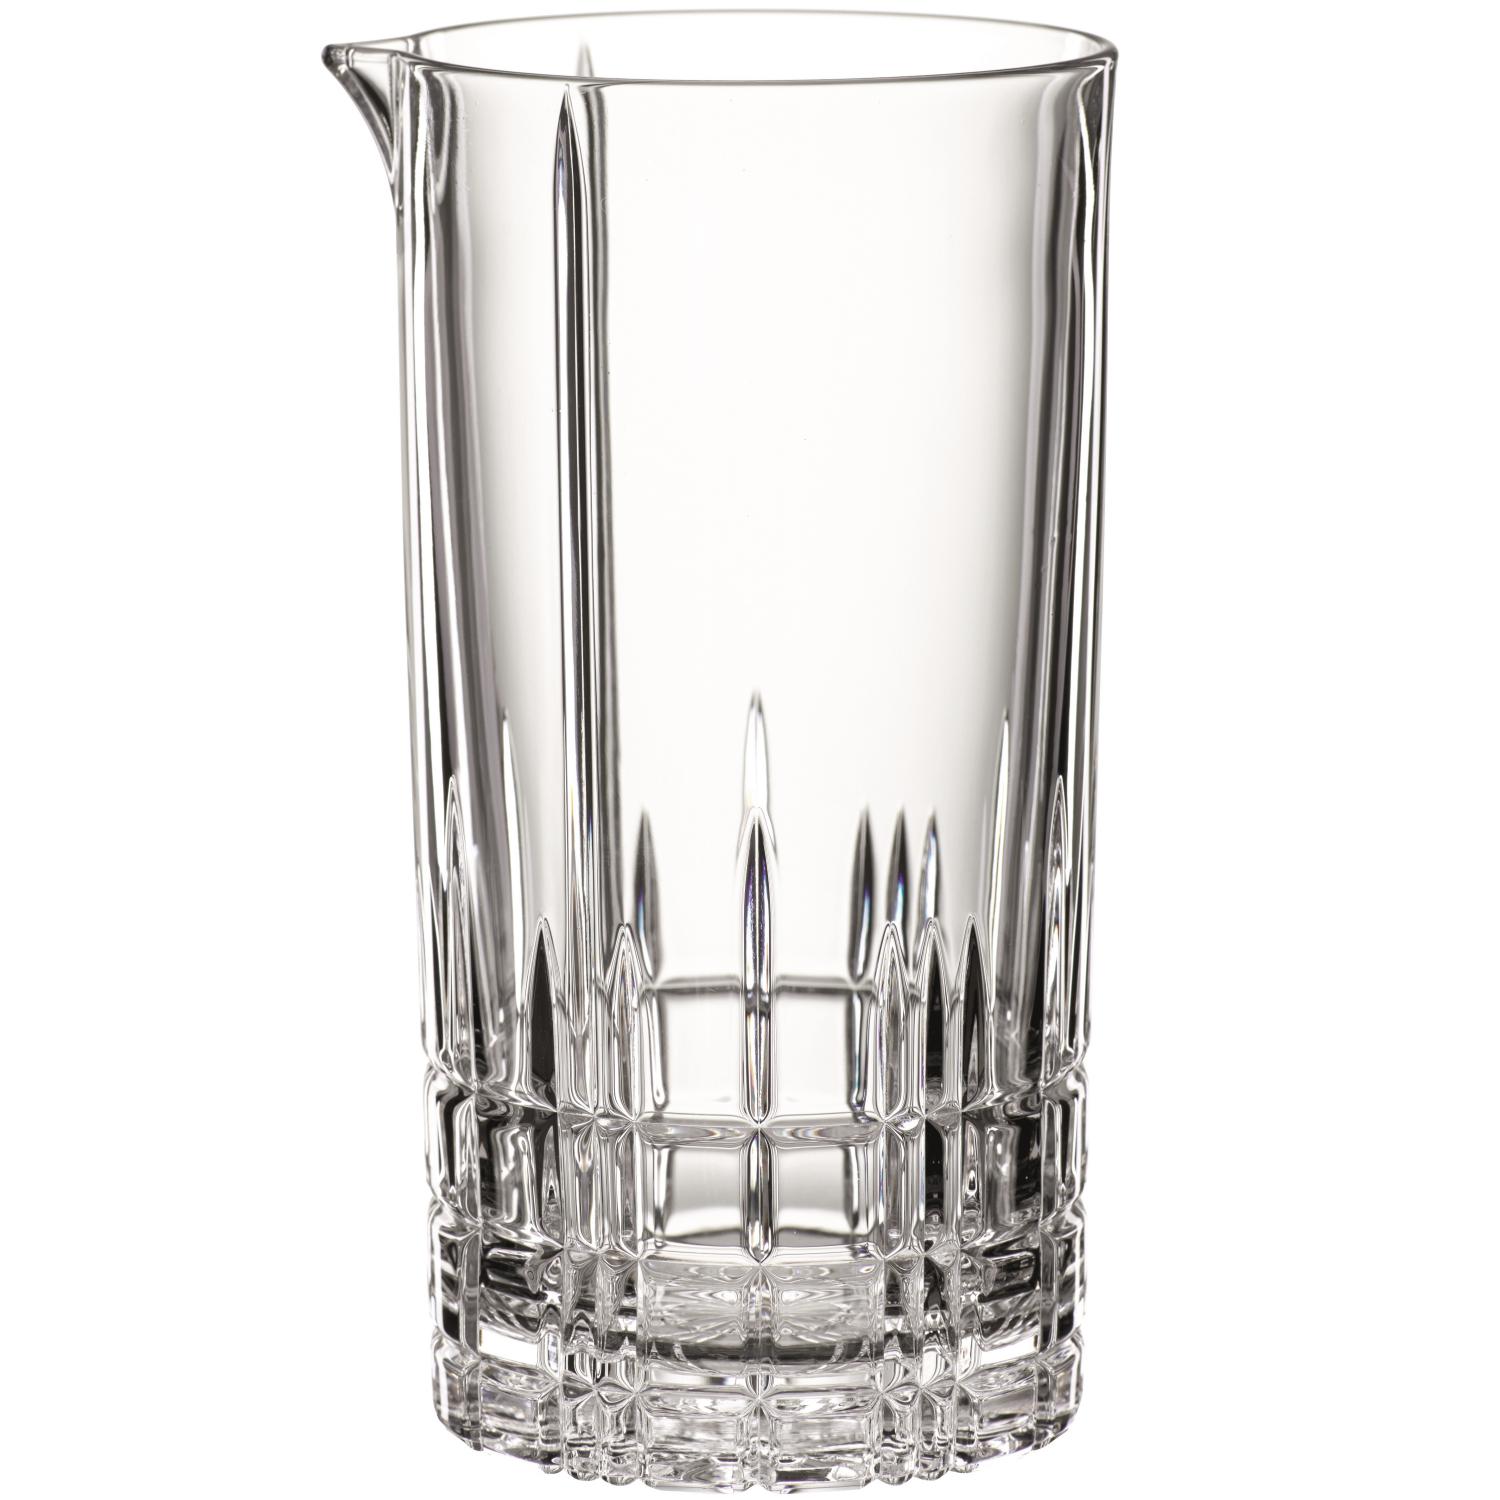 Кувшин для смешивания Spiegelau Perfect Serve Collection Mixing Glass Large 740 мл (арт. 4500153)